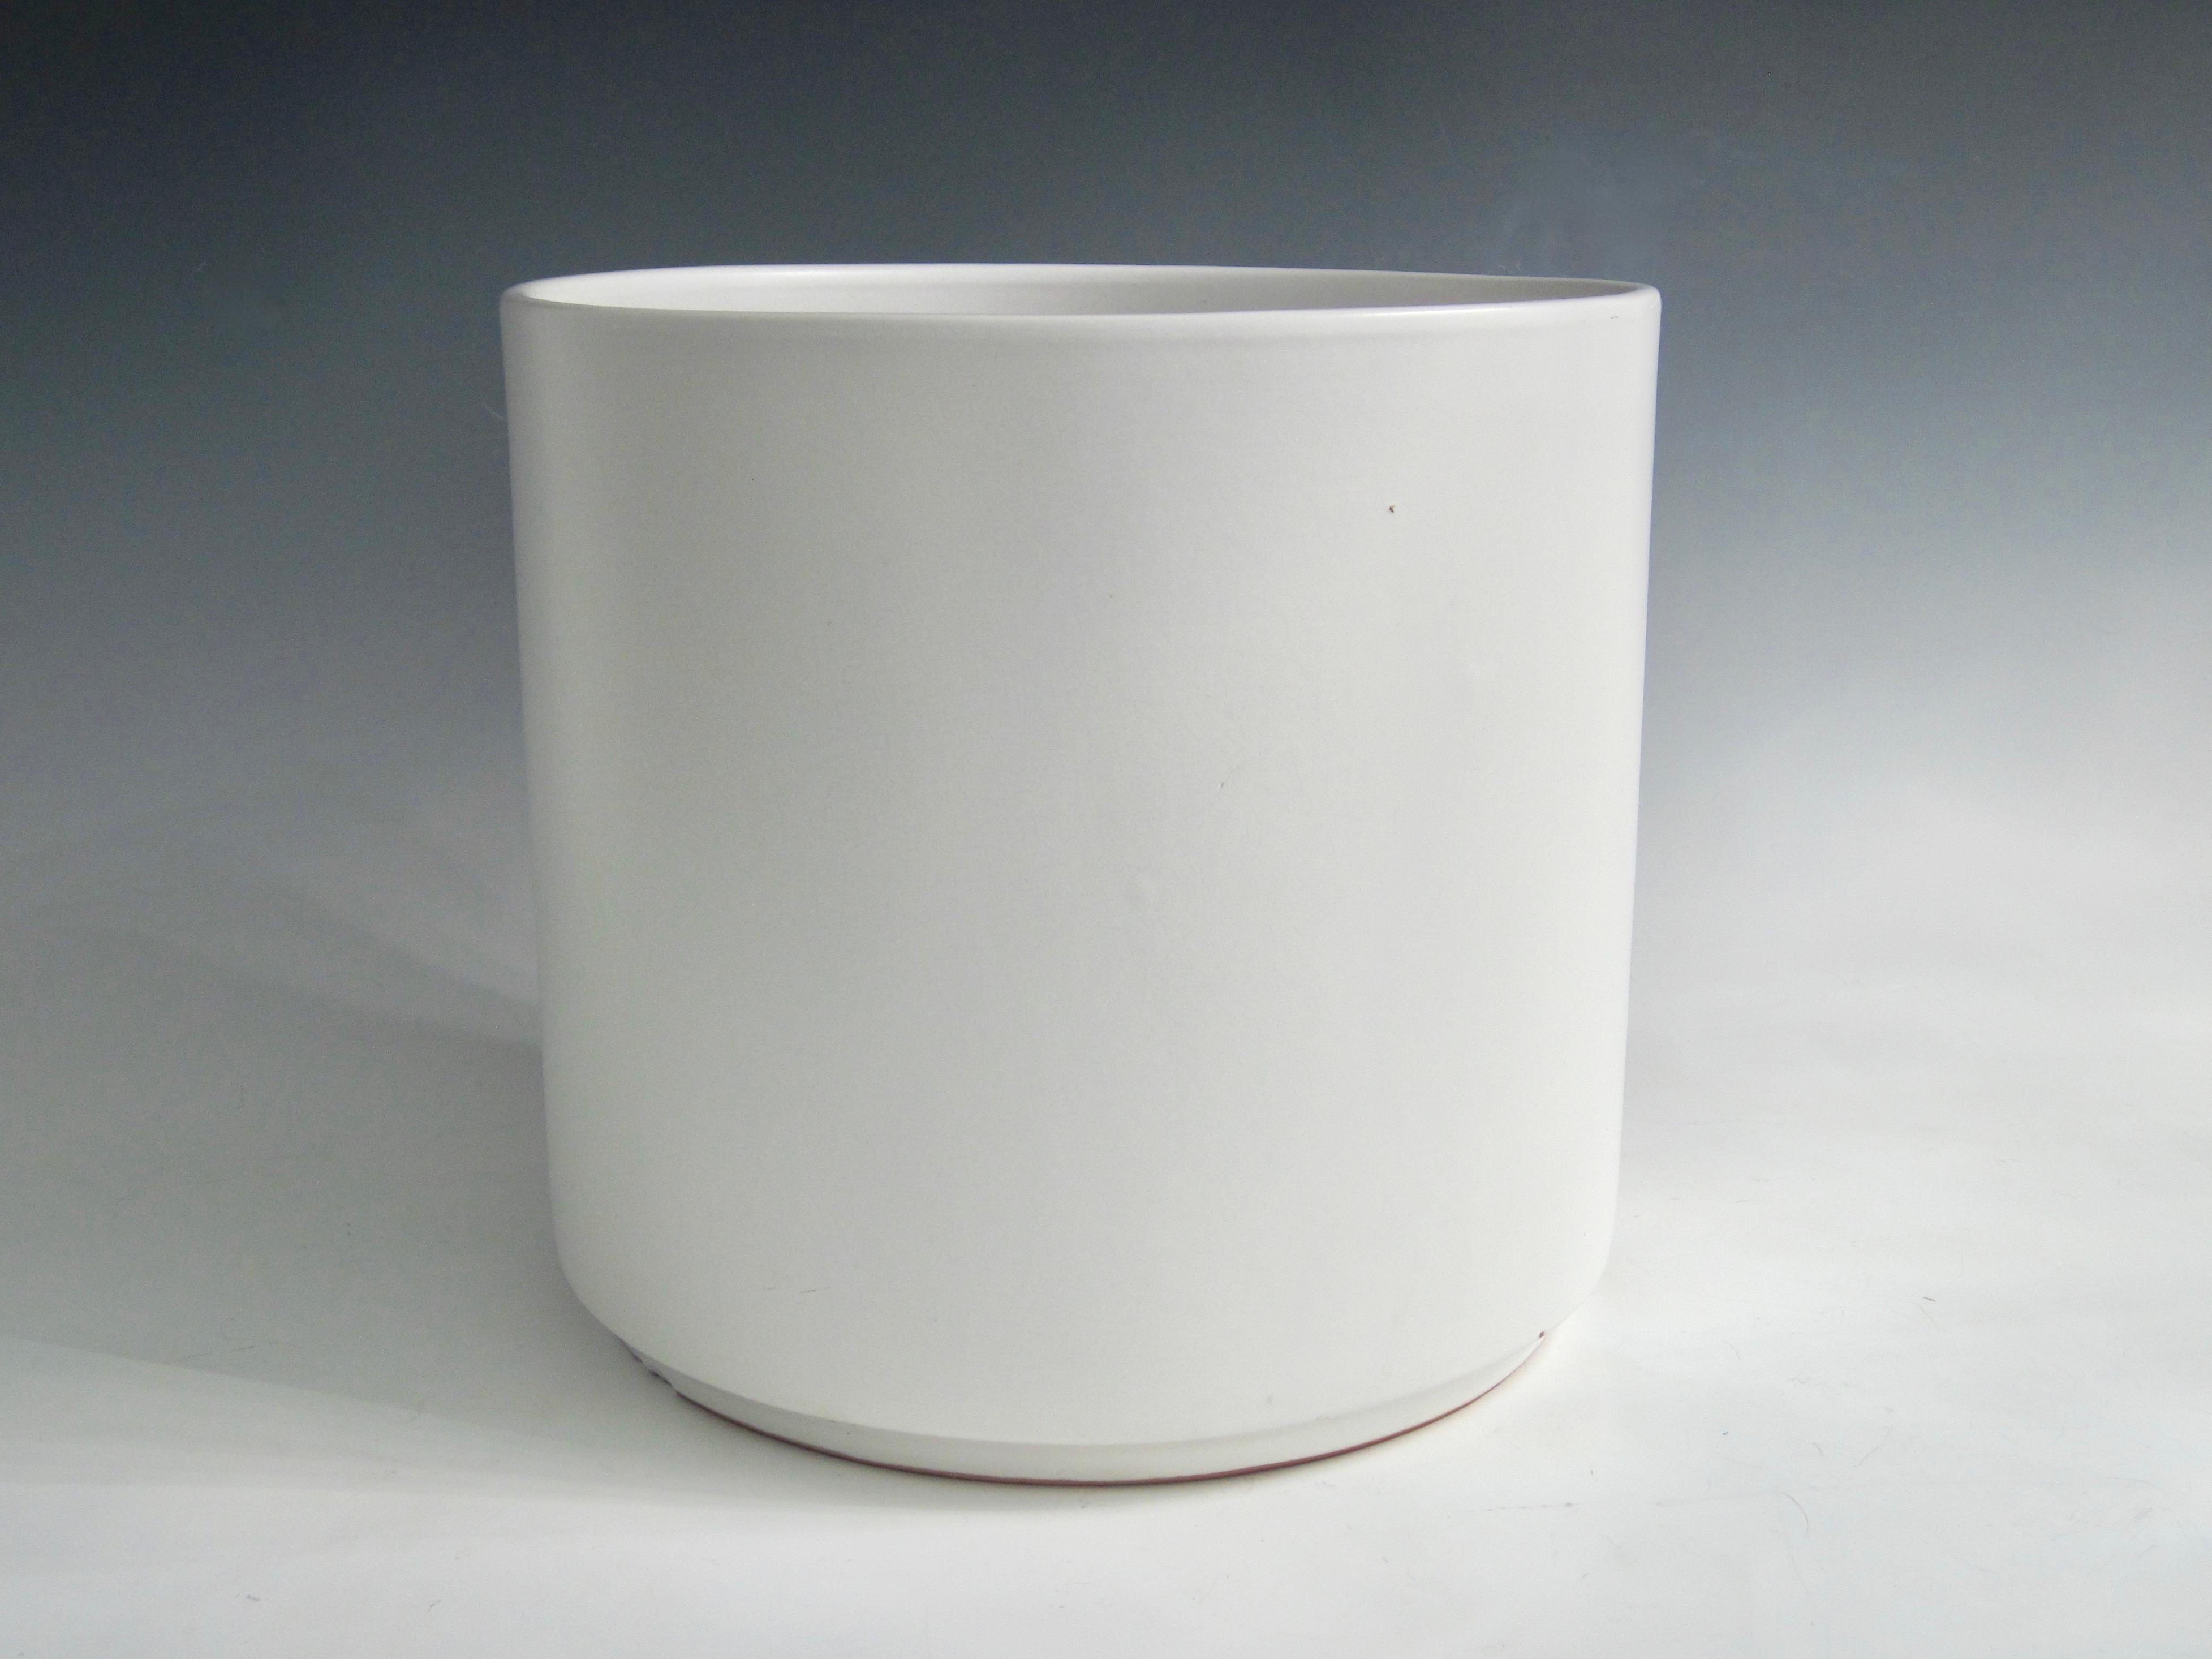 Terracotta Matte White Glazed Terra Cotta Planter Pot For Sale